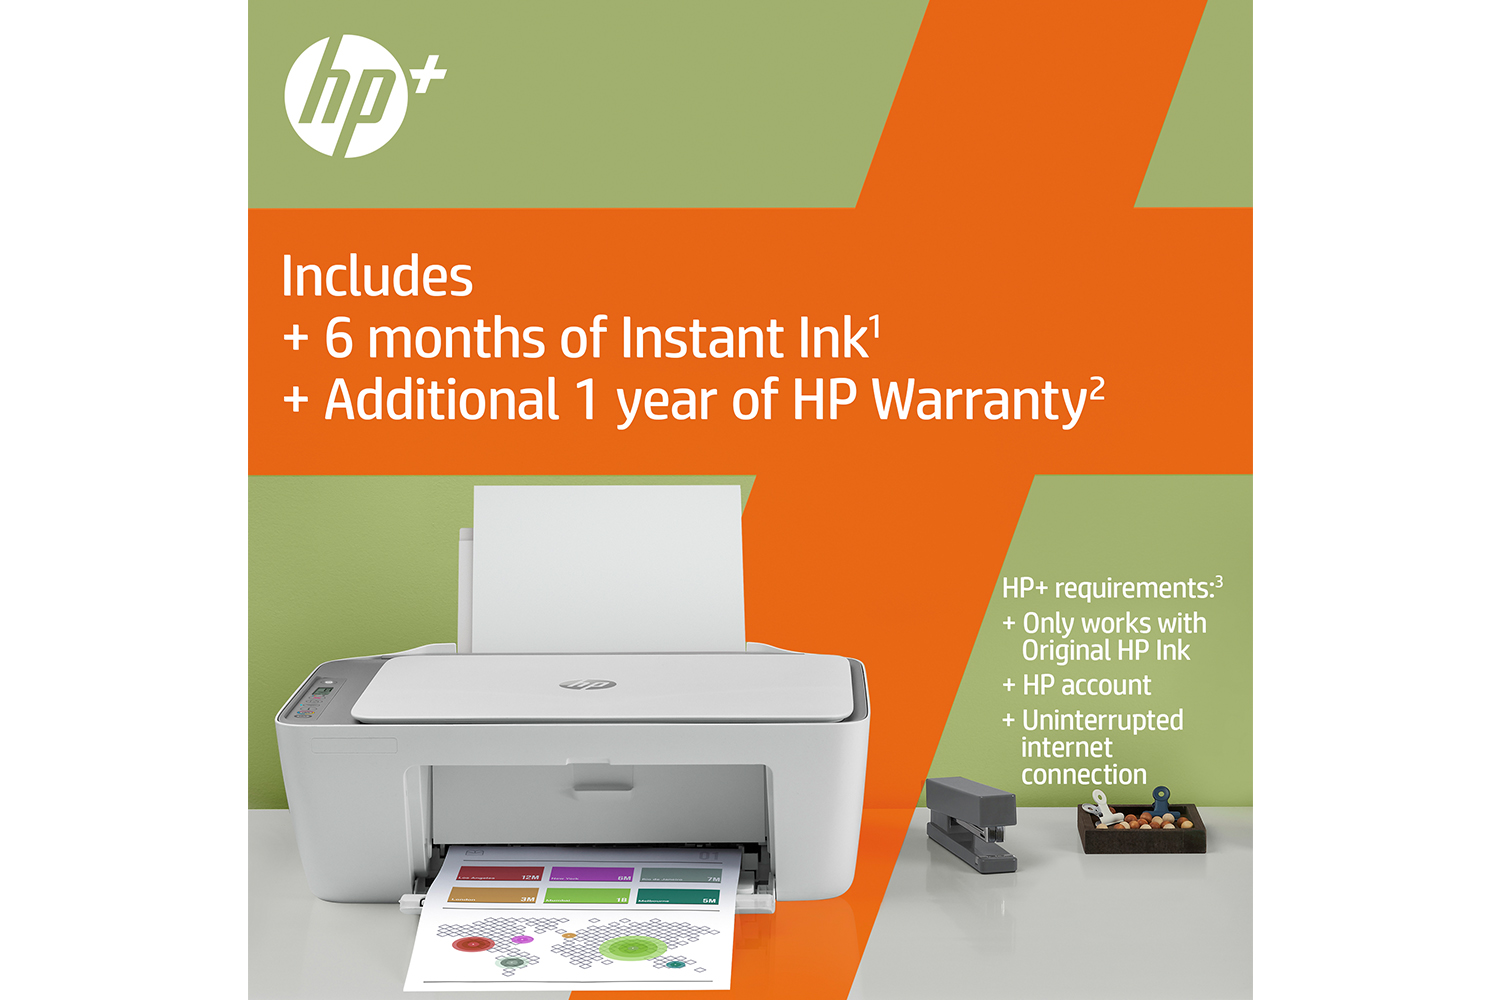 HP DeskJet 2720e All-in-One Wireless Printer Ireland